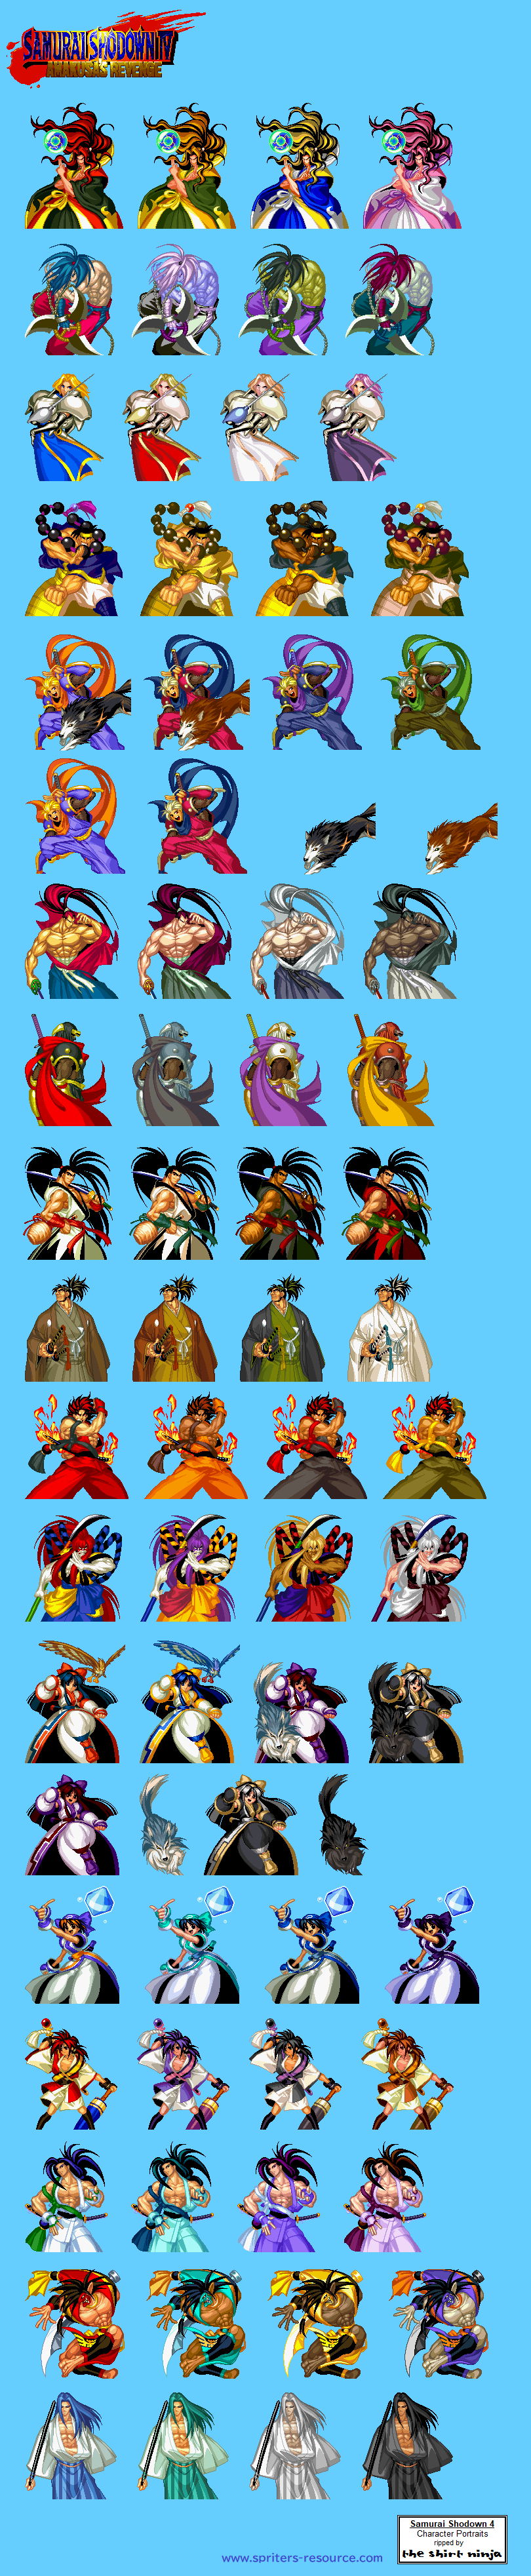 Samurai Shodown 4 - Character Portraits